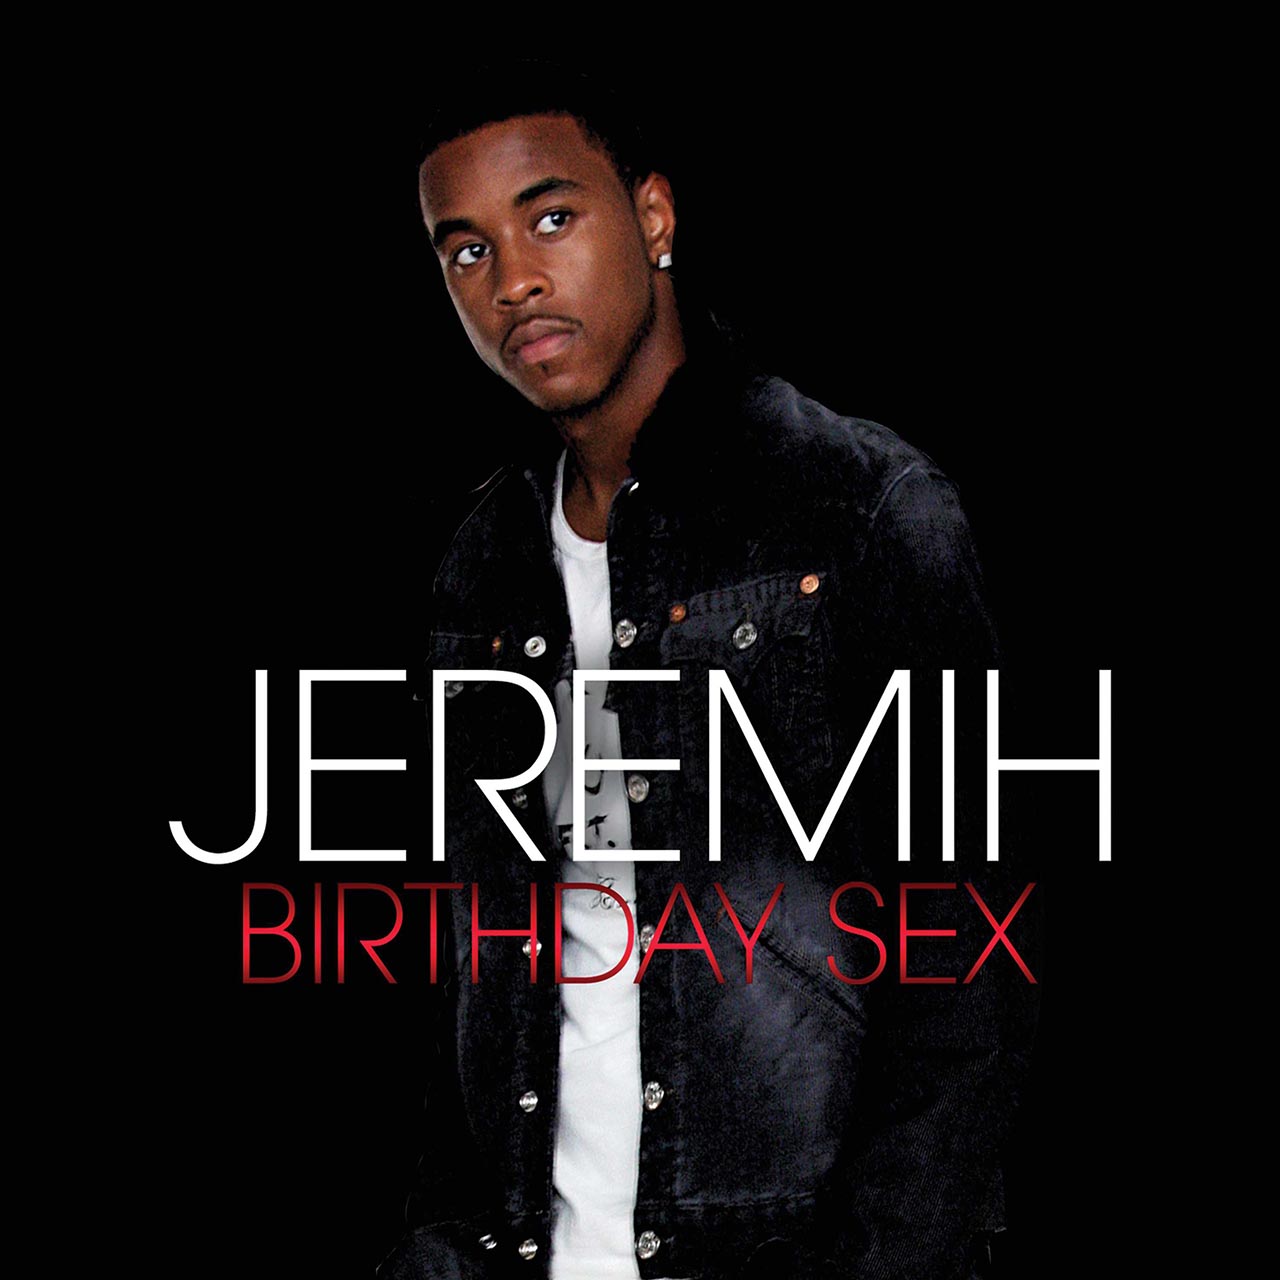 Jeremih & Mick Schultz Revisit The Smash Single “Birthday Sex”